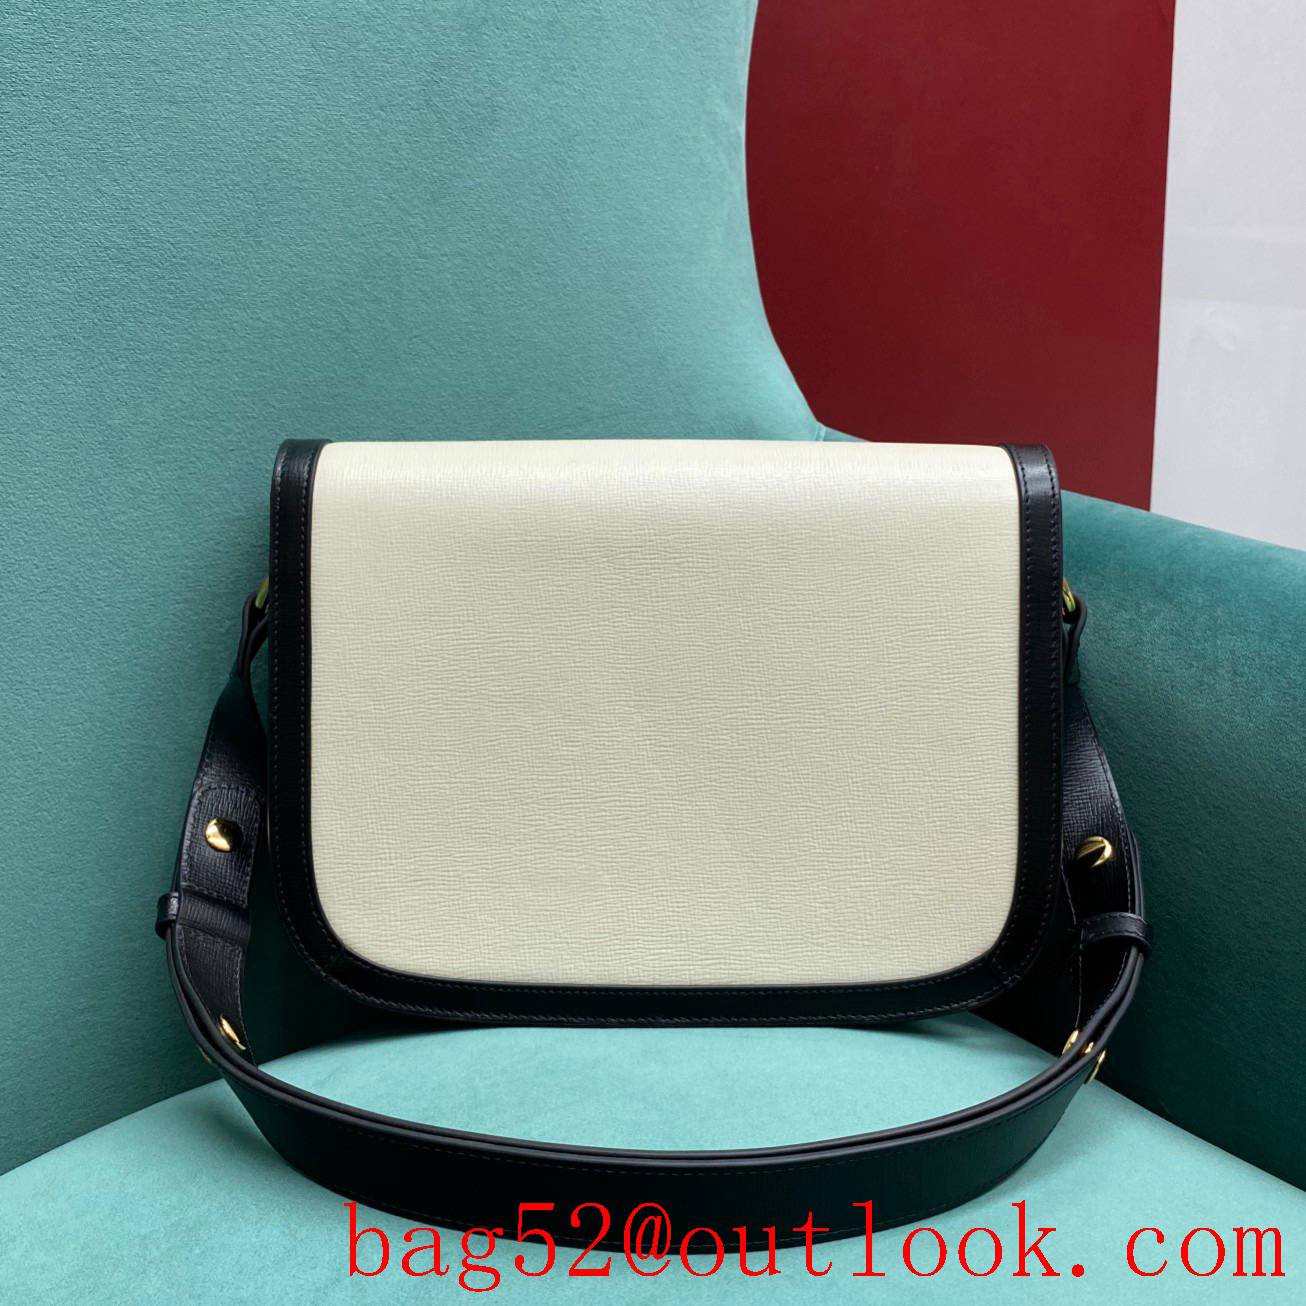 Gucci 1955 Full Leather Saddle yellow white shoulder handbag